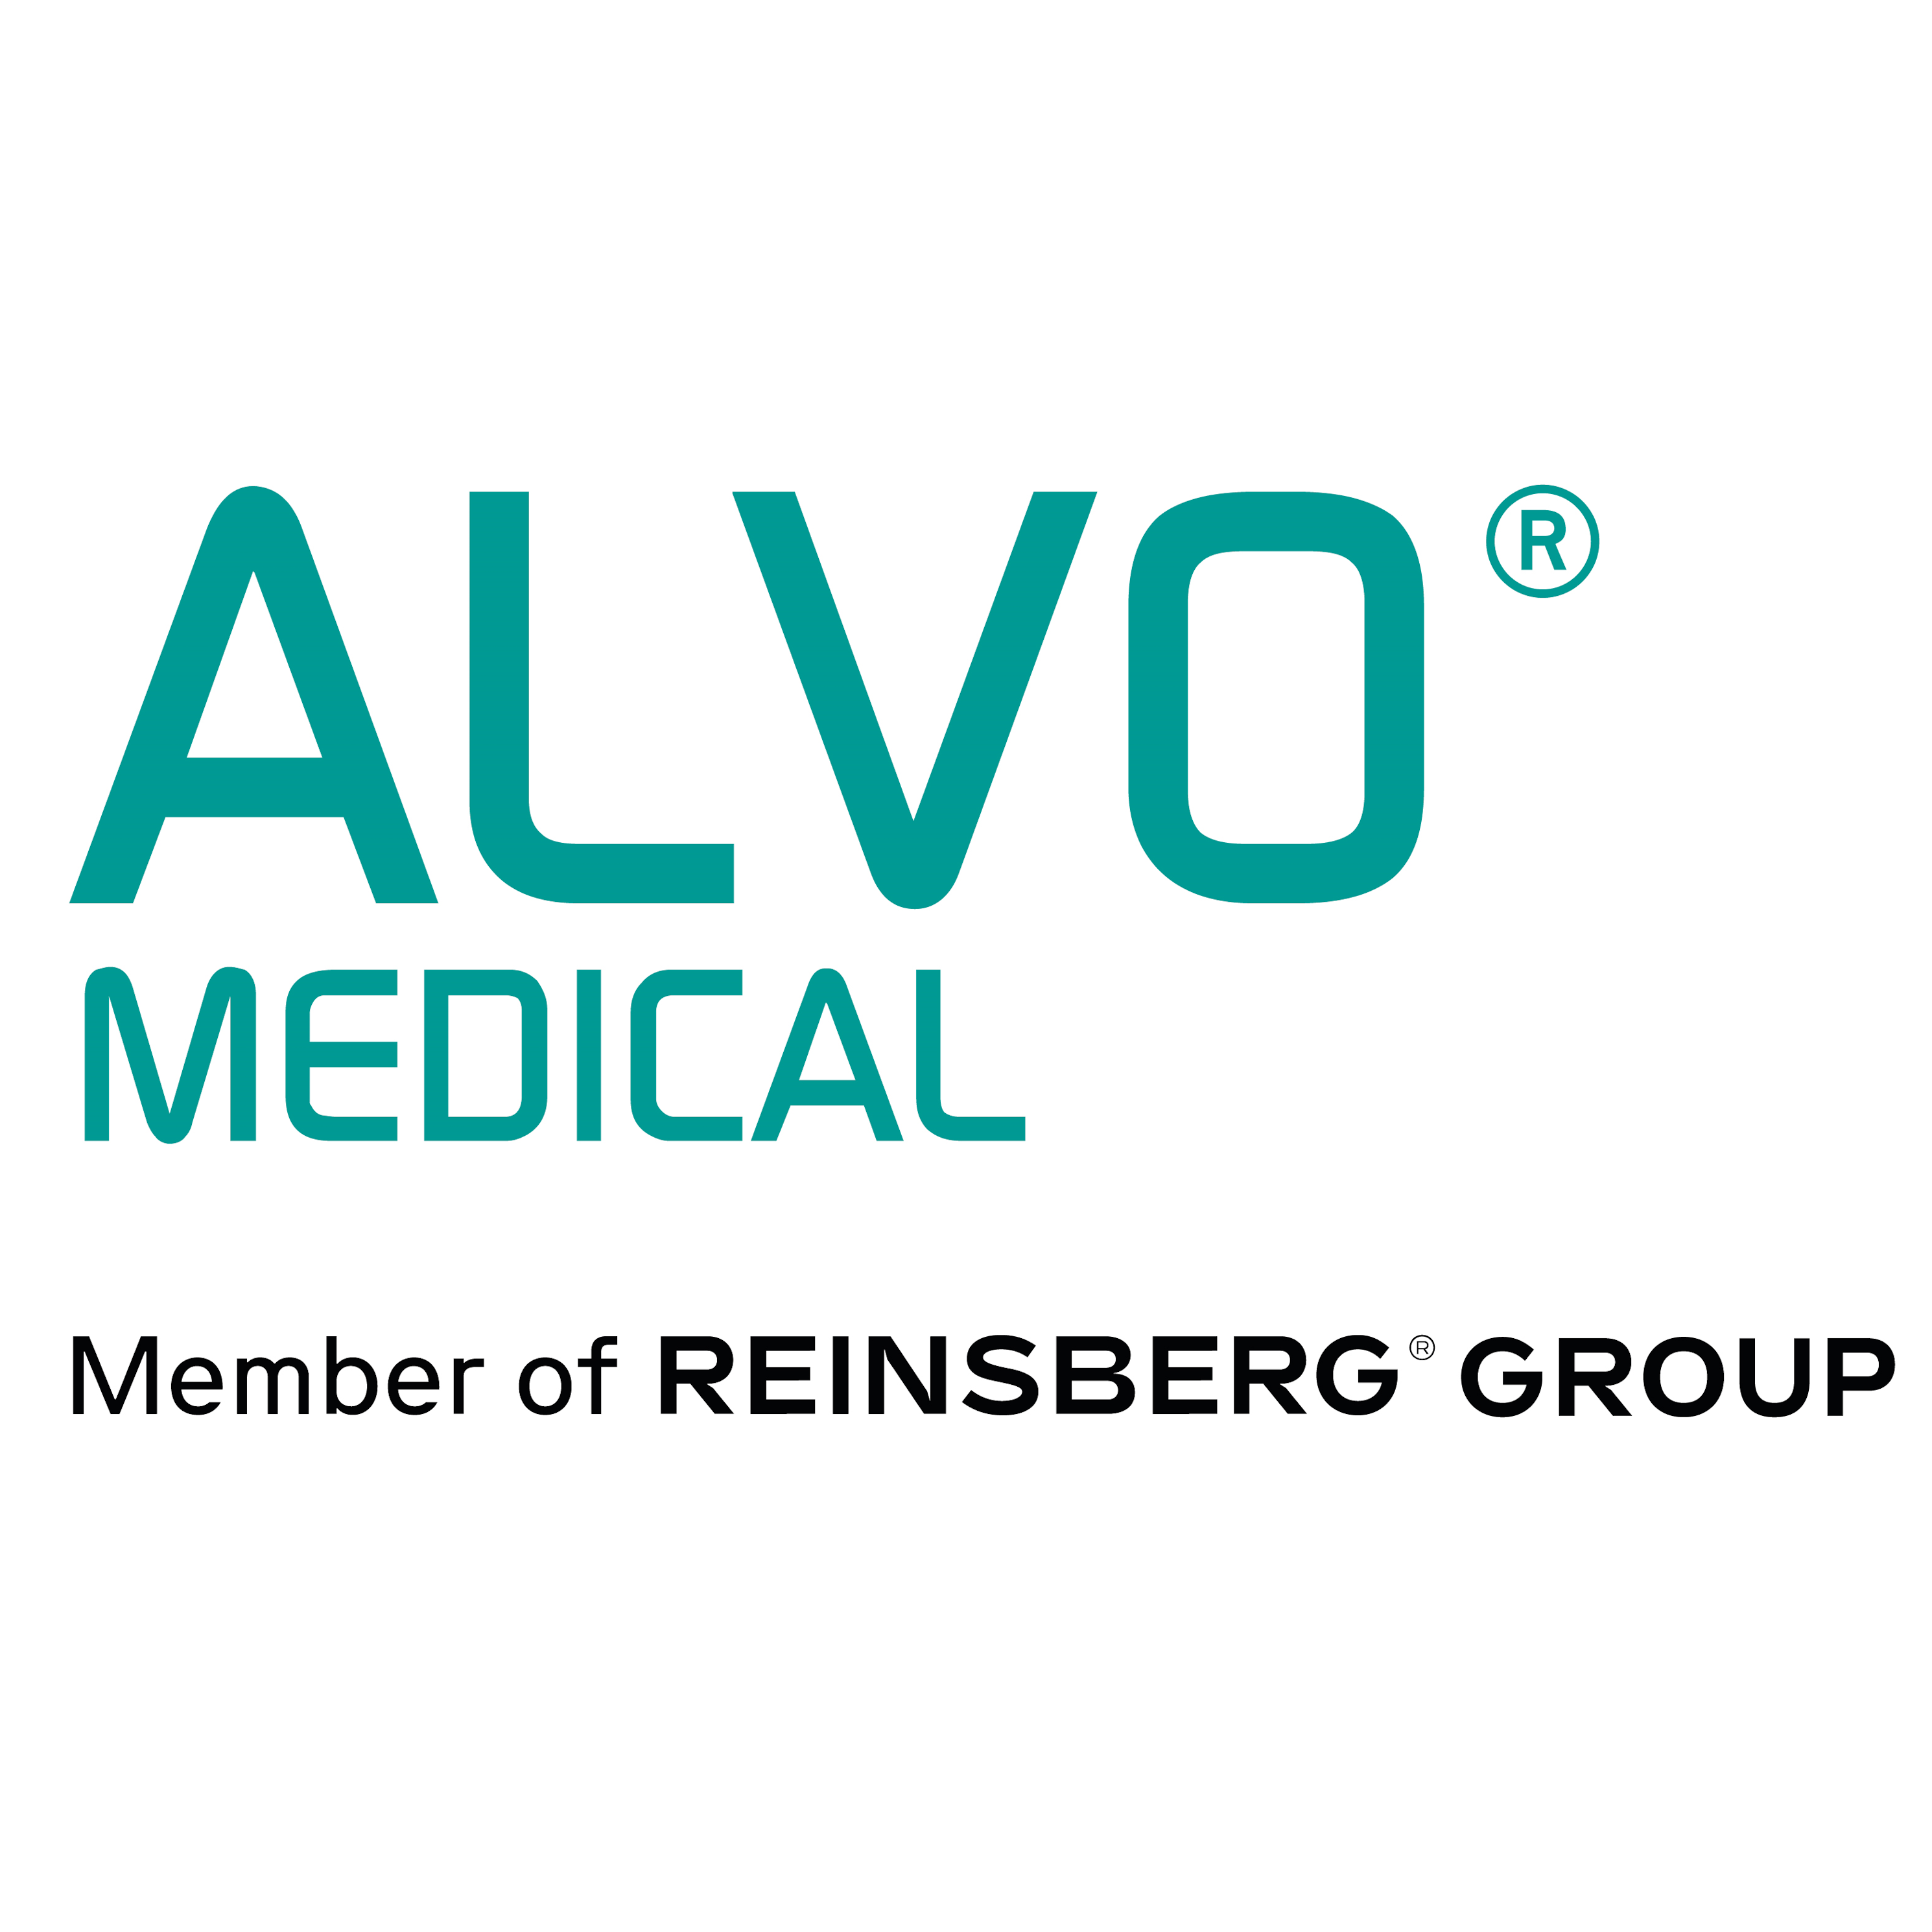 ALVO Medical